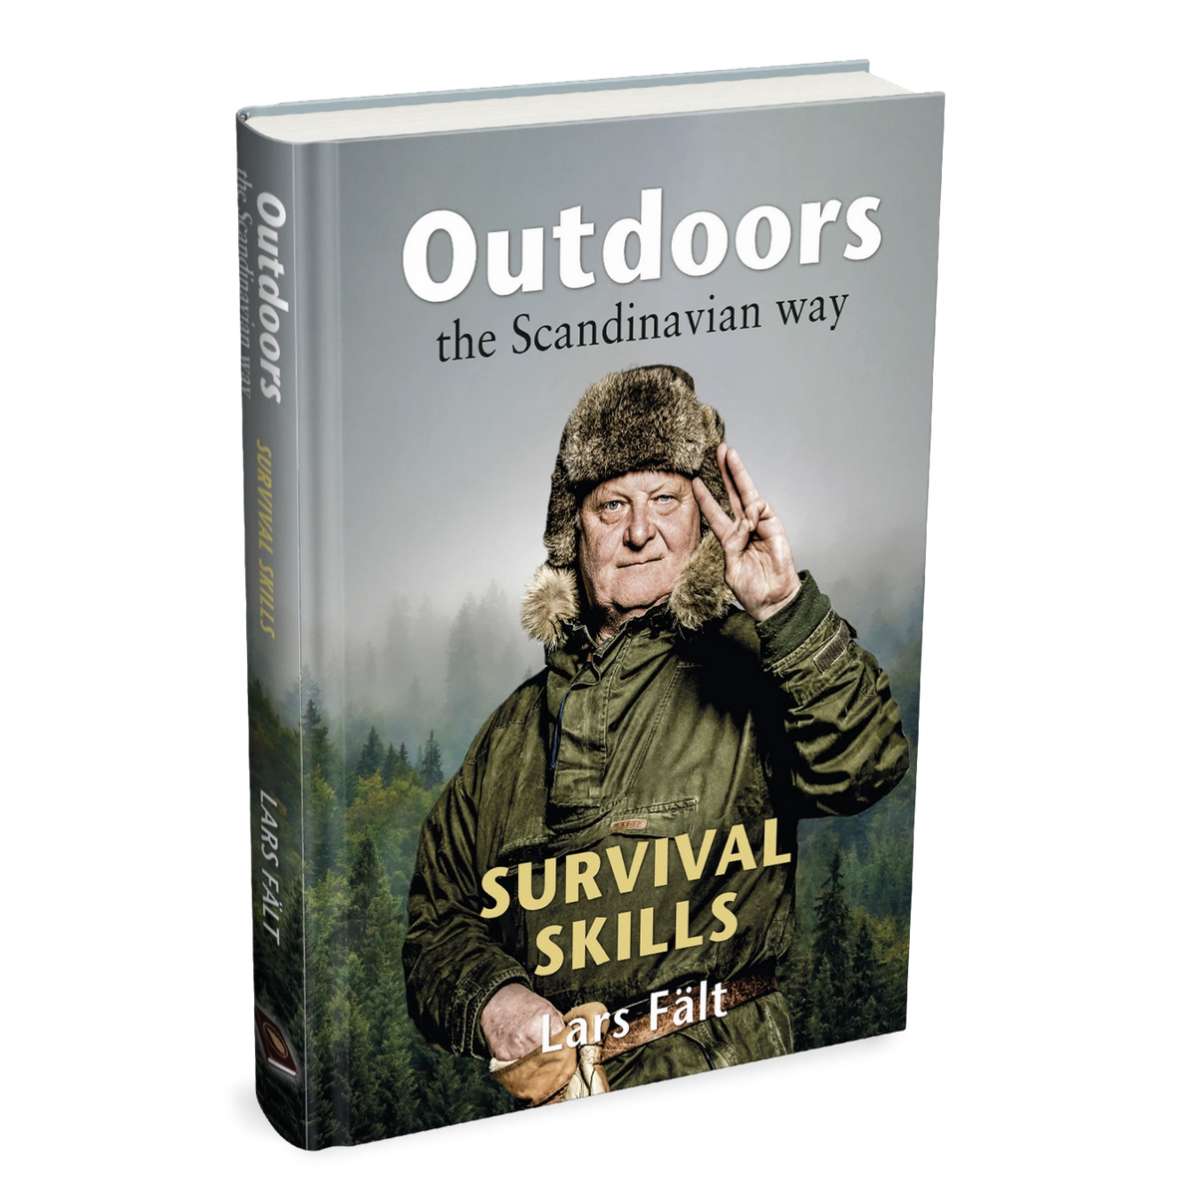 Outdoors the Scandinavian Way - Survival Skills, by Lars Falt